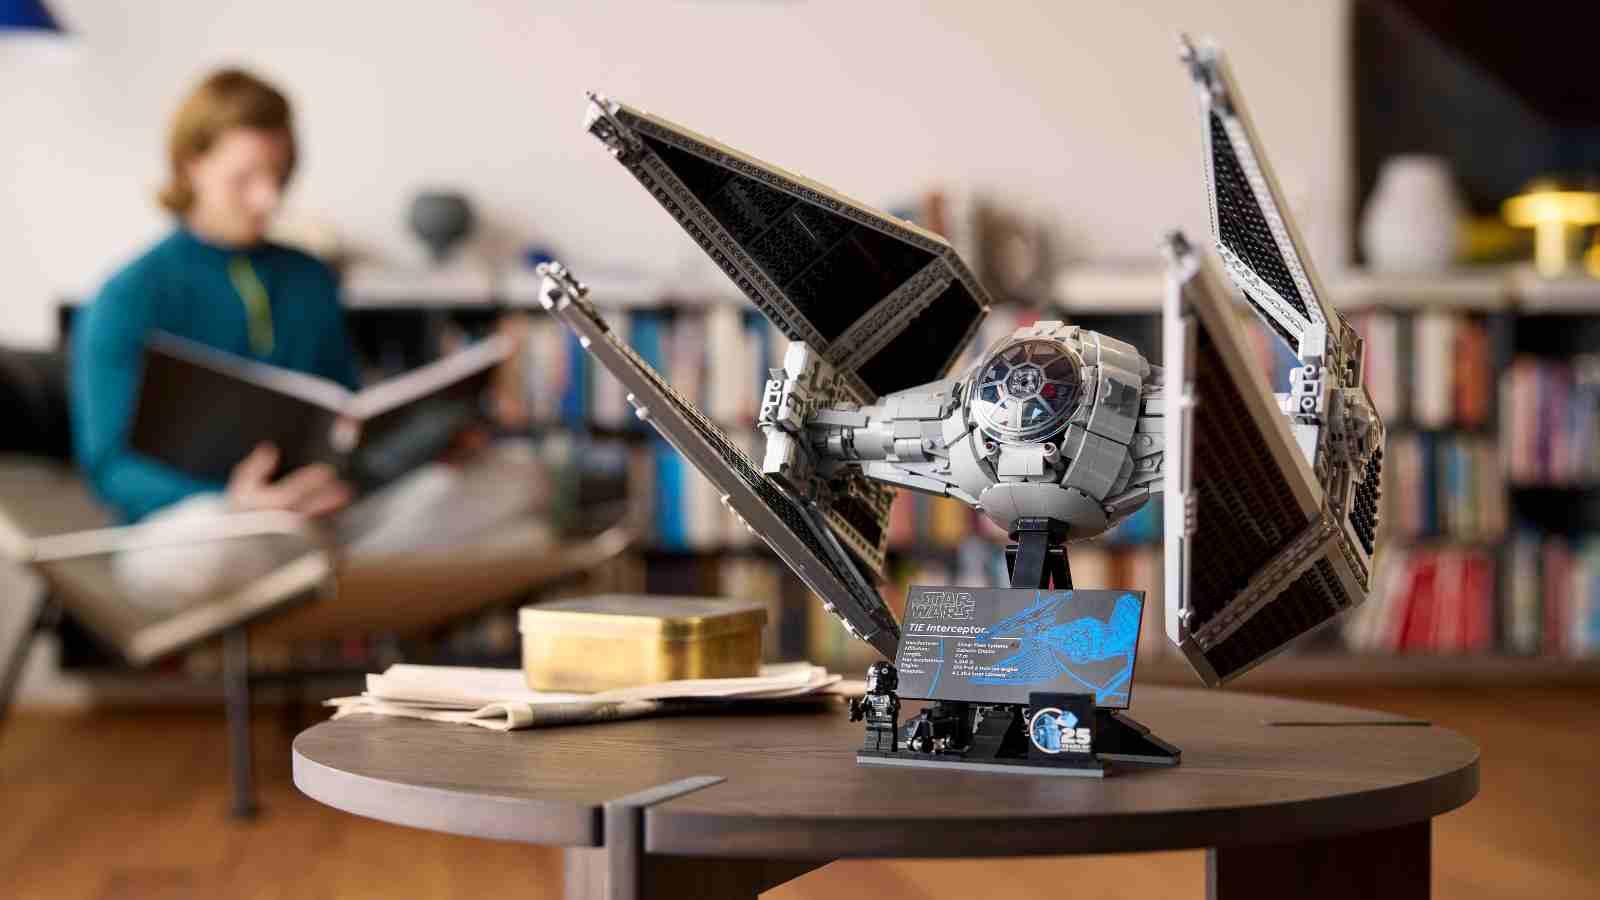 The LEGO Star Wars TIE Interceptor on display